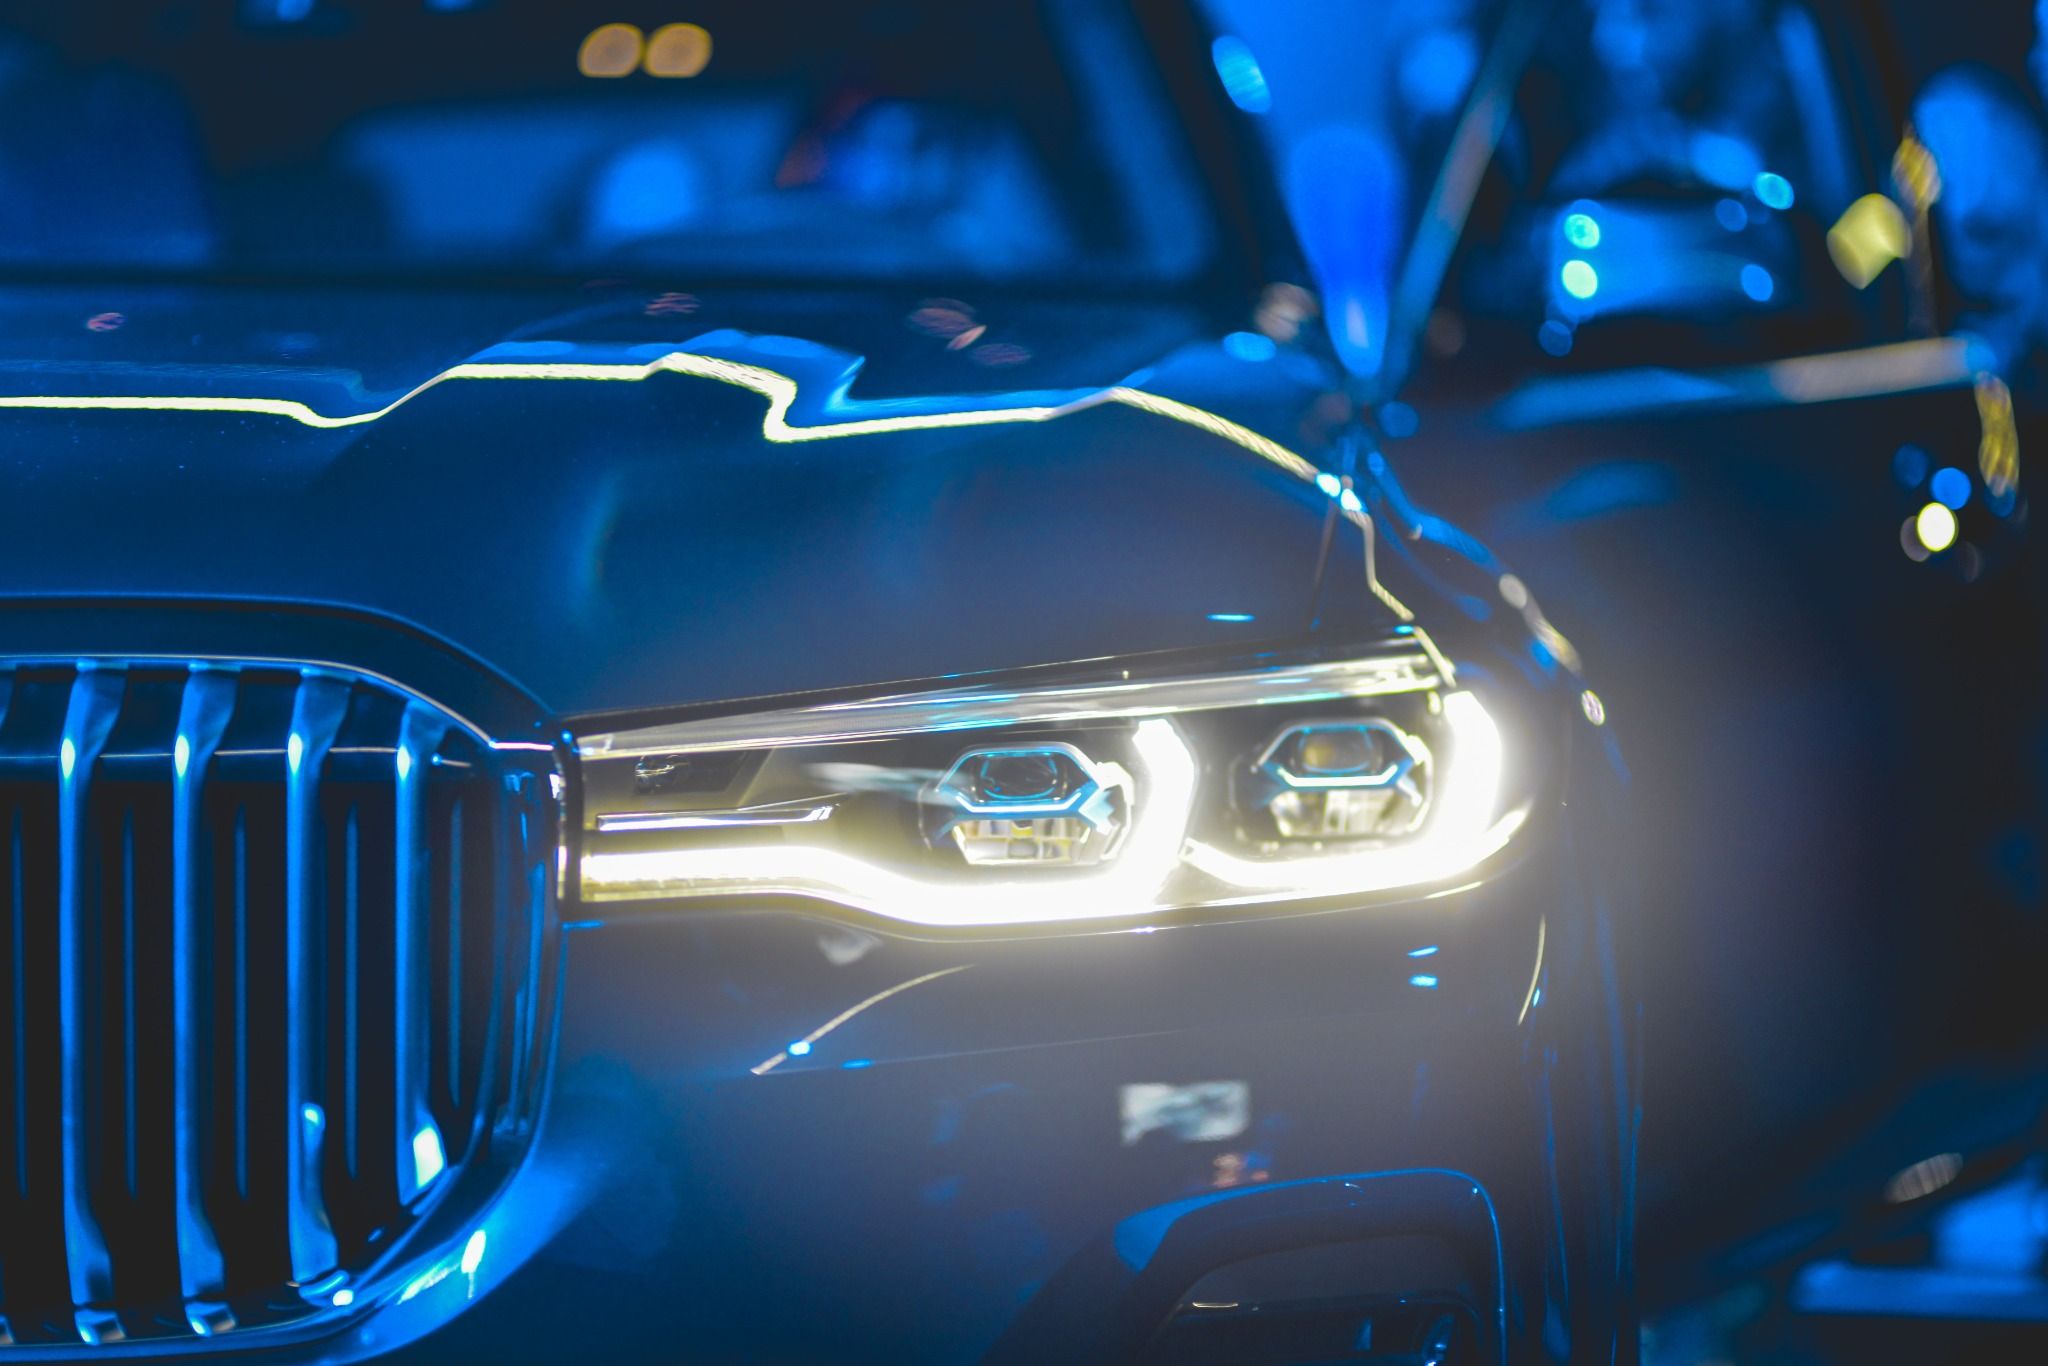 close up of a BMW headlight